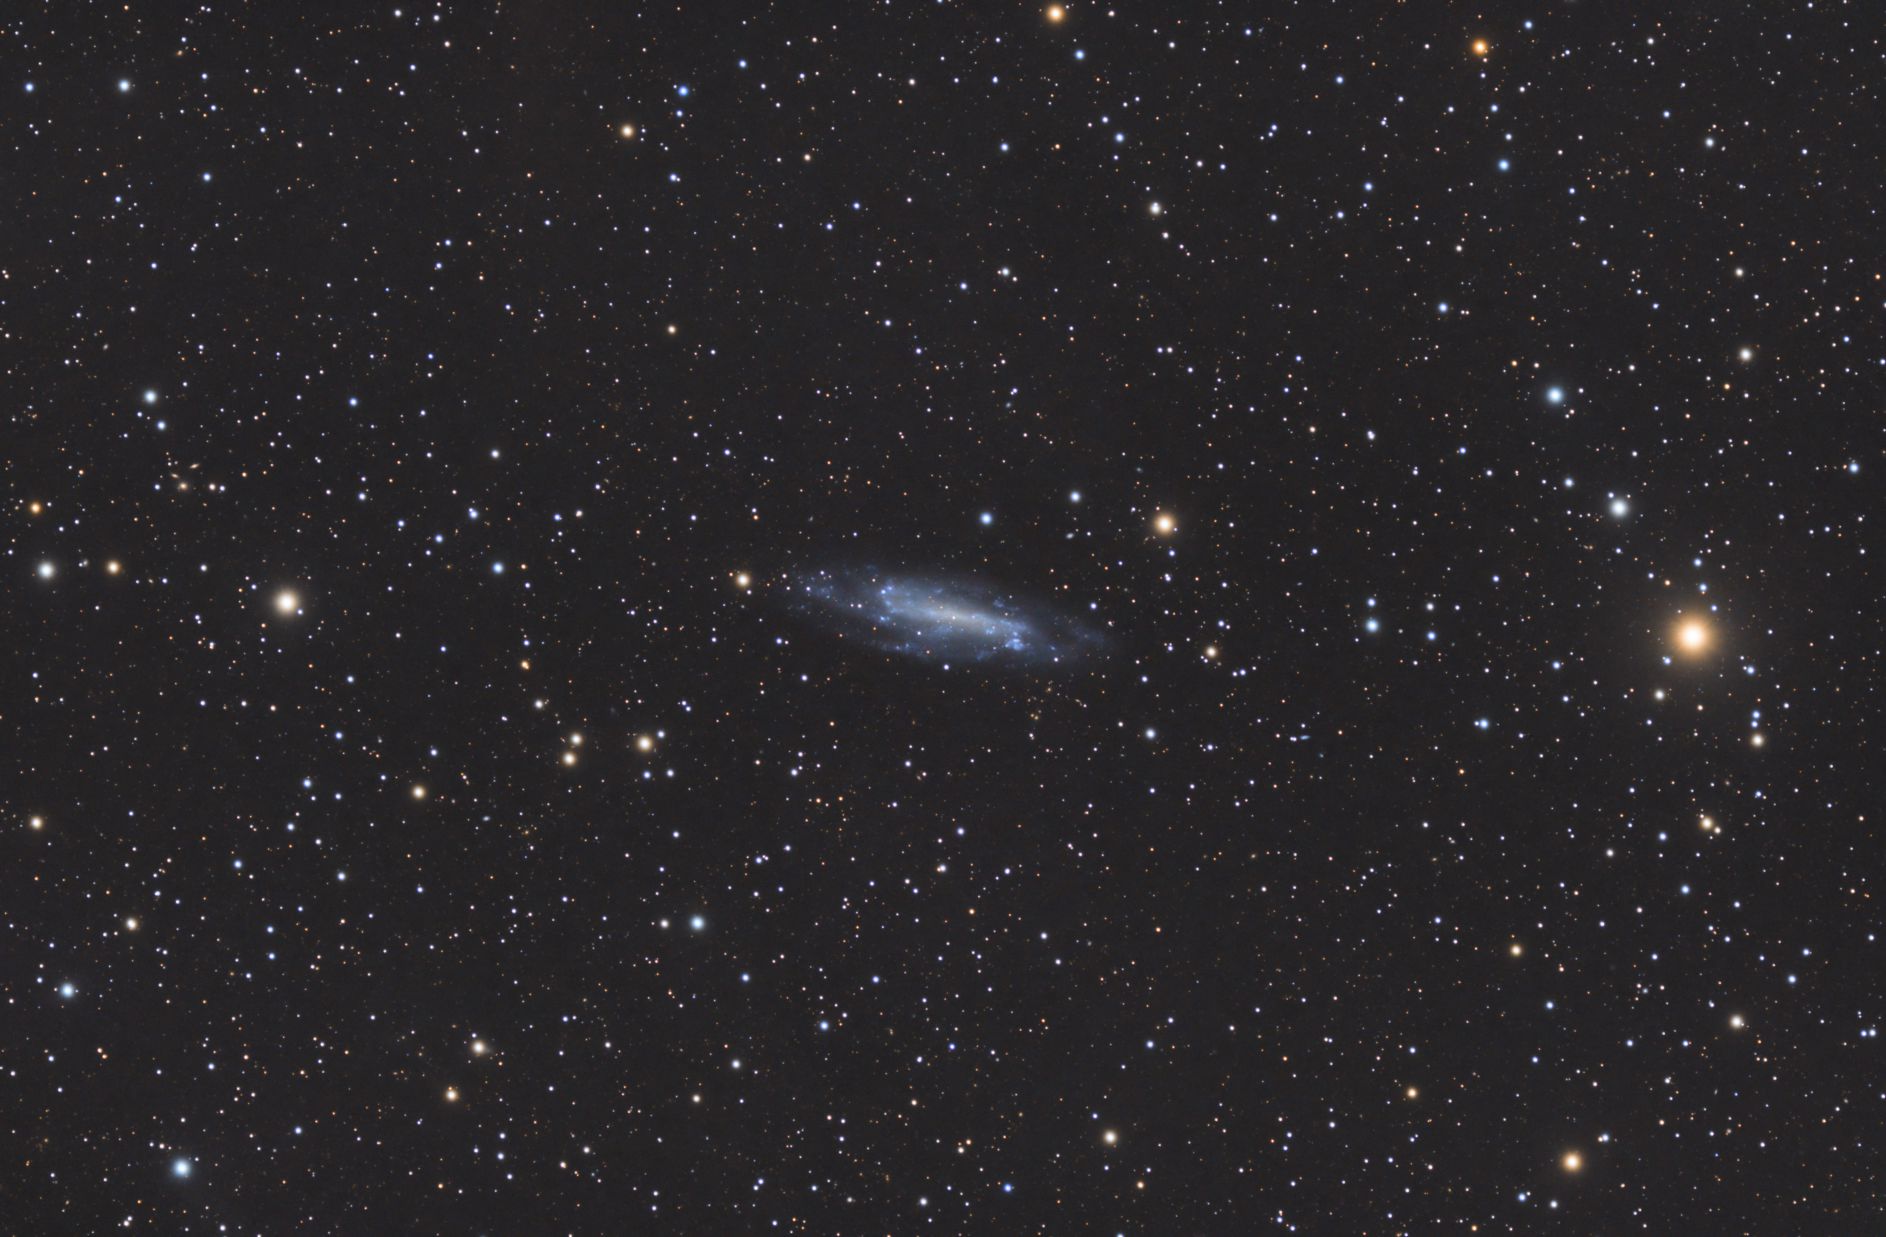 NGC4236.jpg